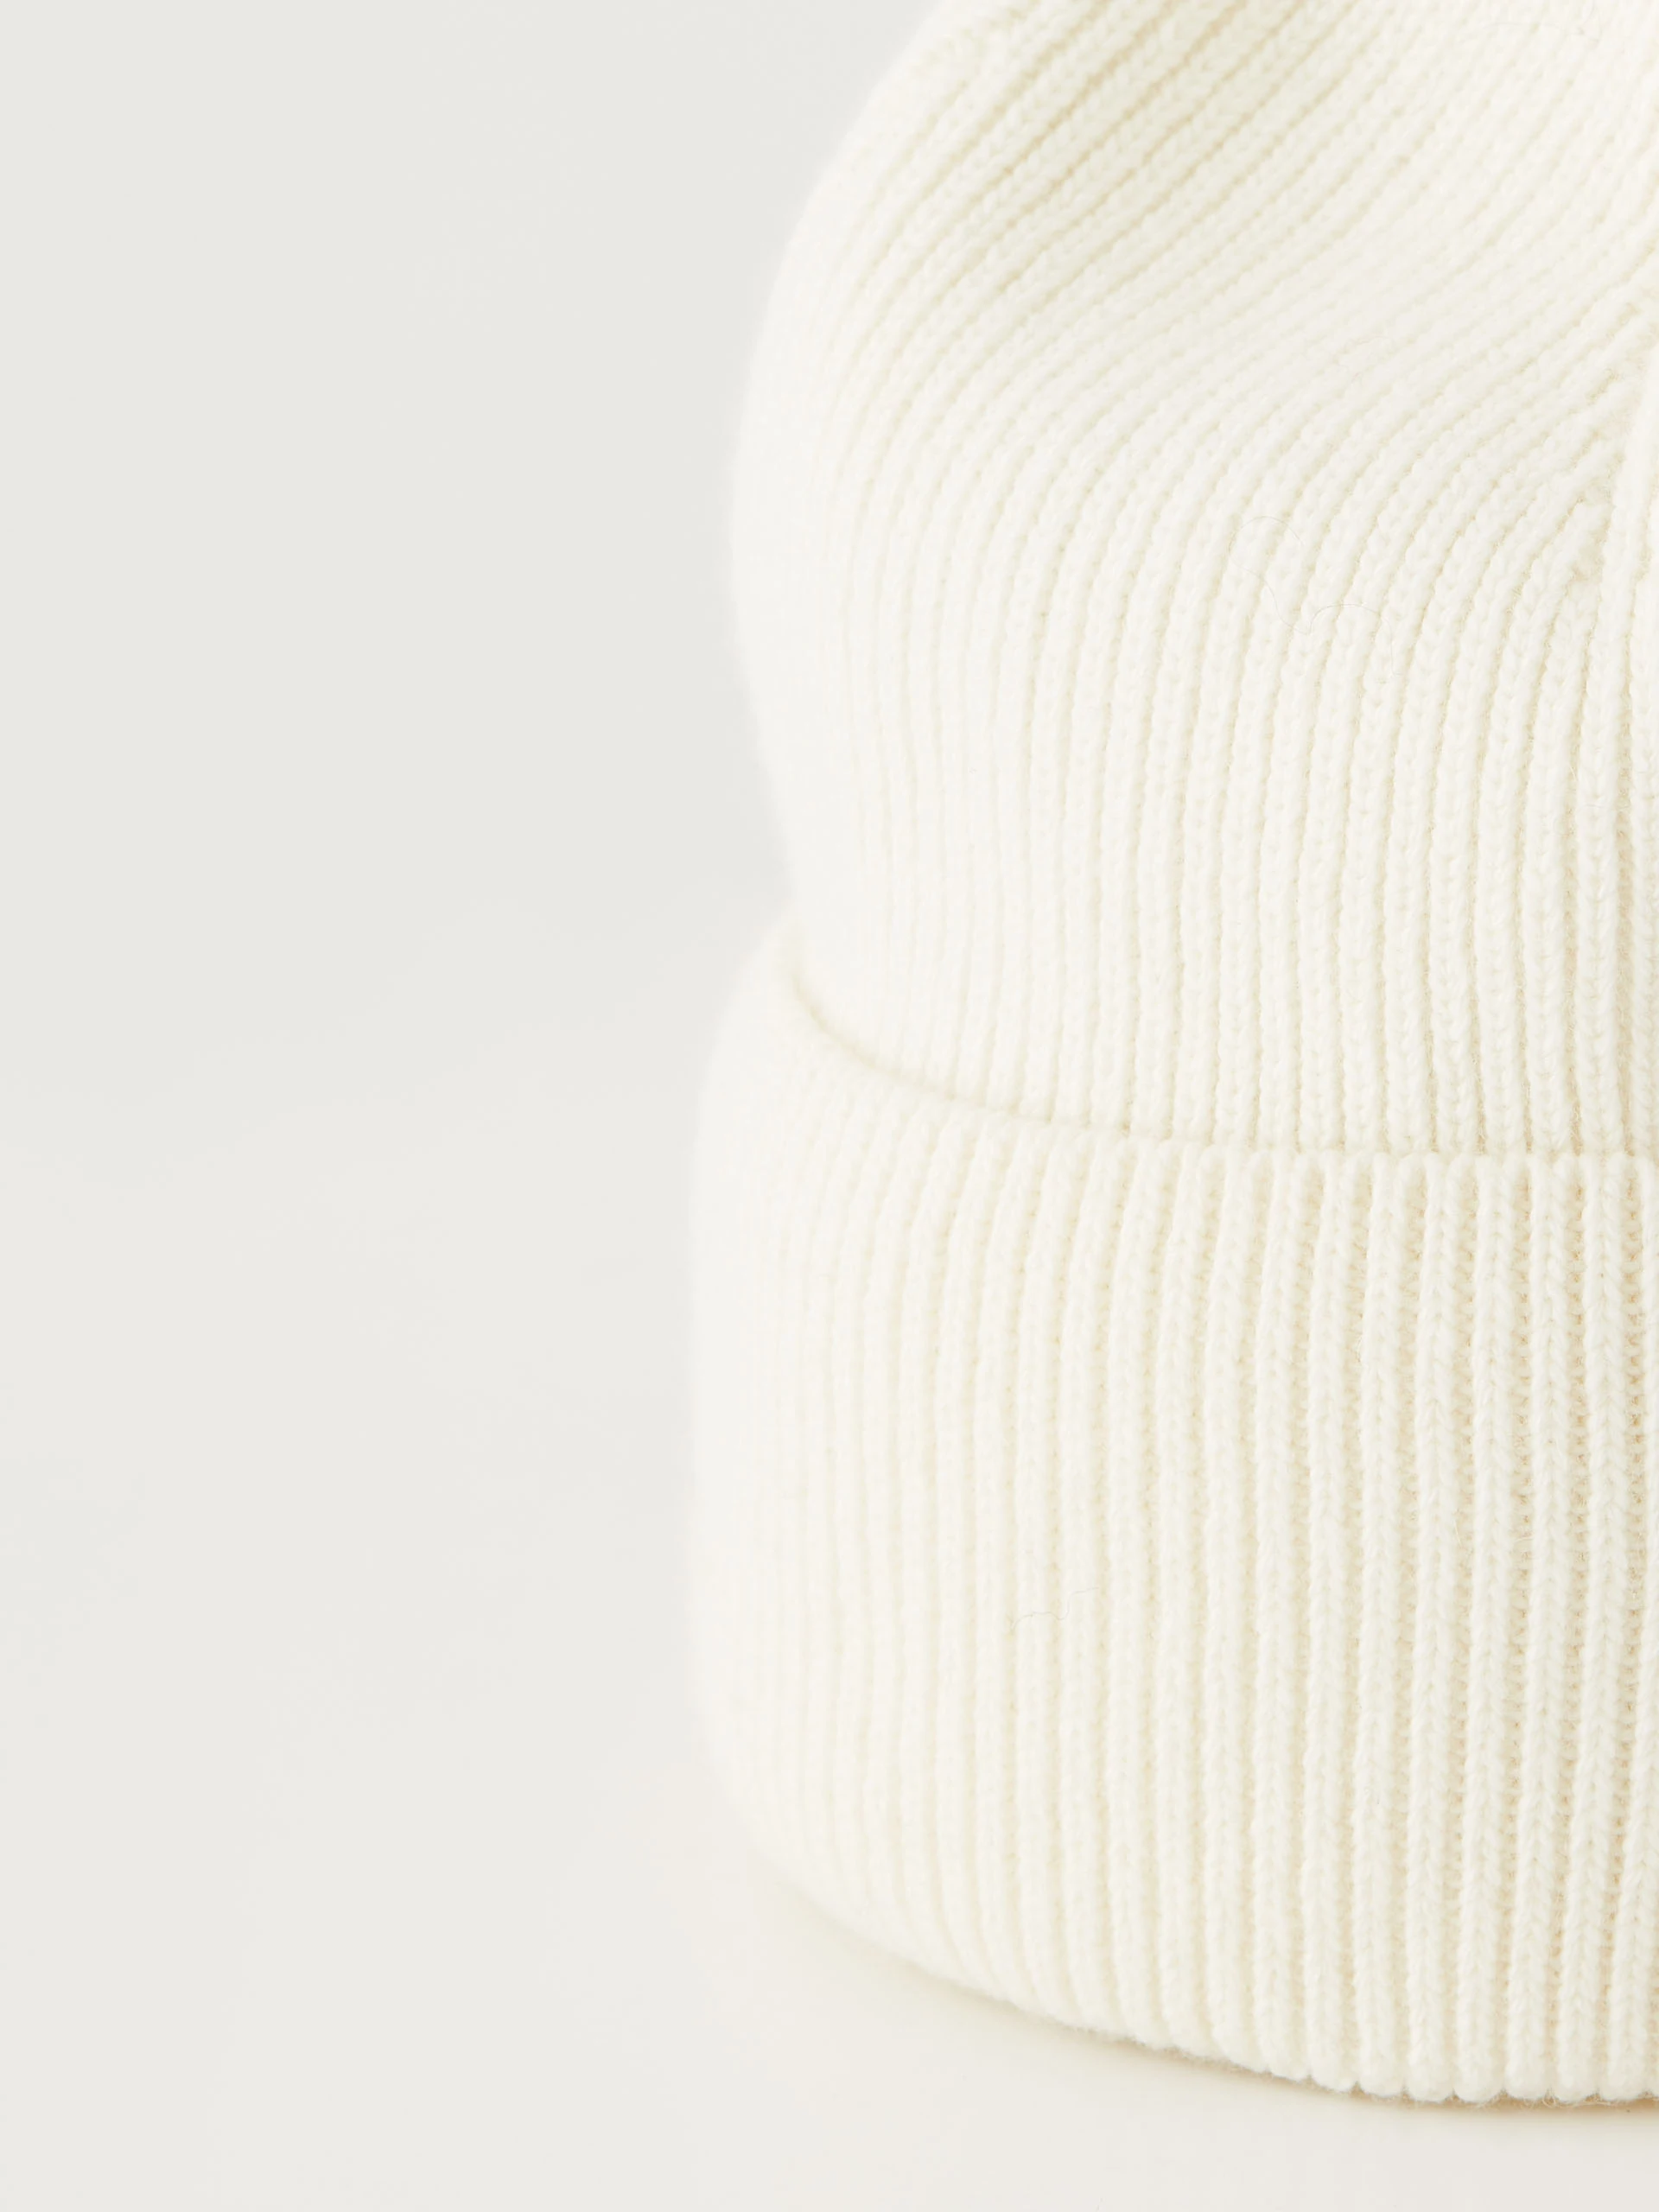 White cap with wool, viscose and cashmere-Taranko